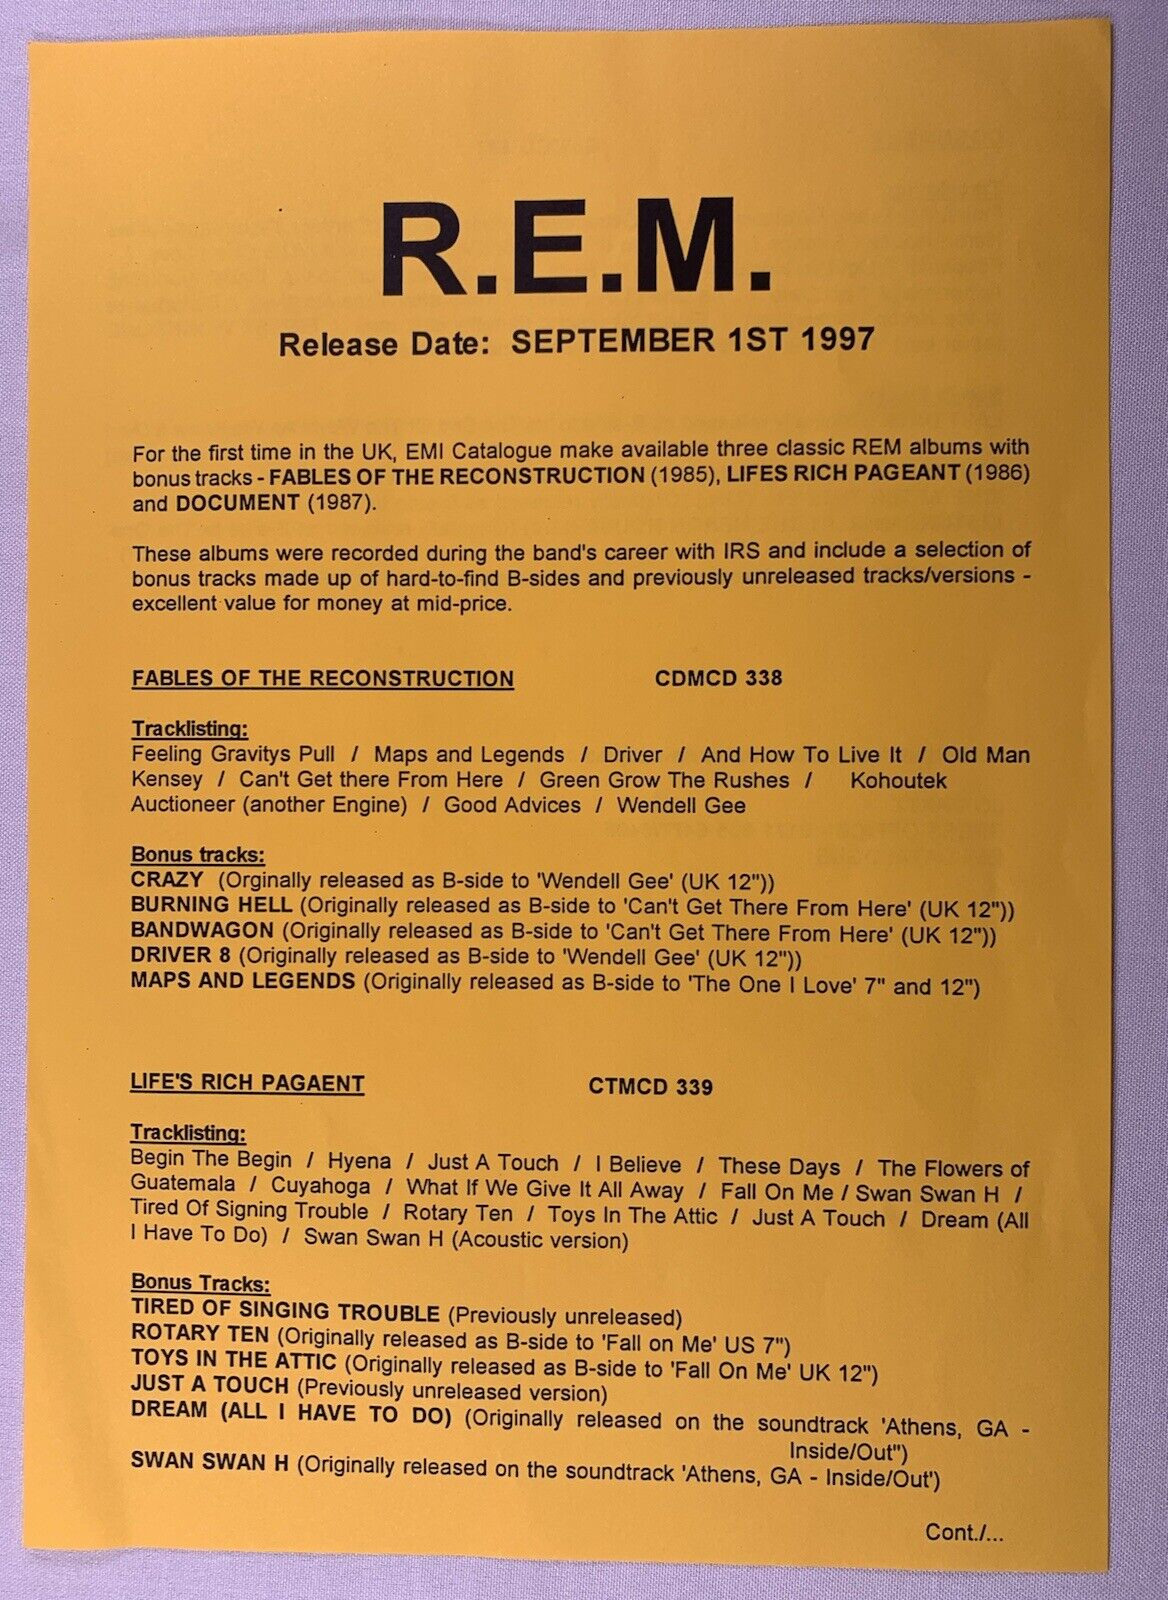 R.E.M Press Release Original Vintage EMI Triple Album Release September 1997